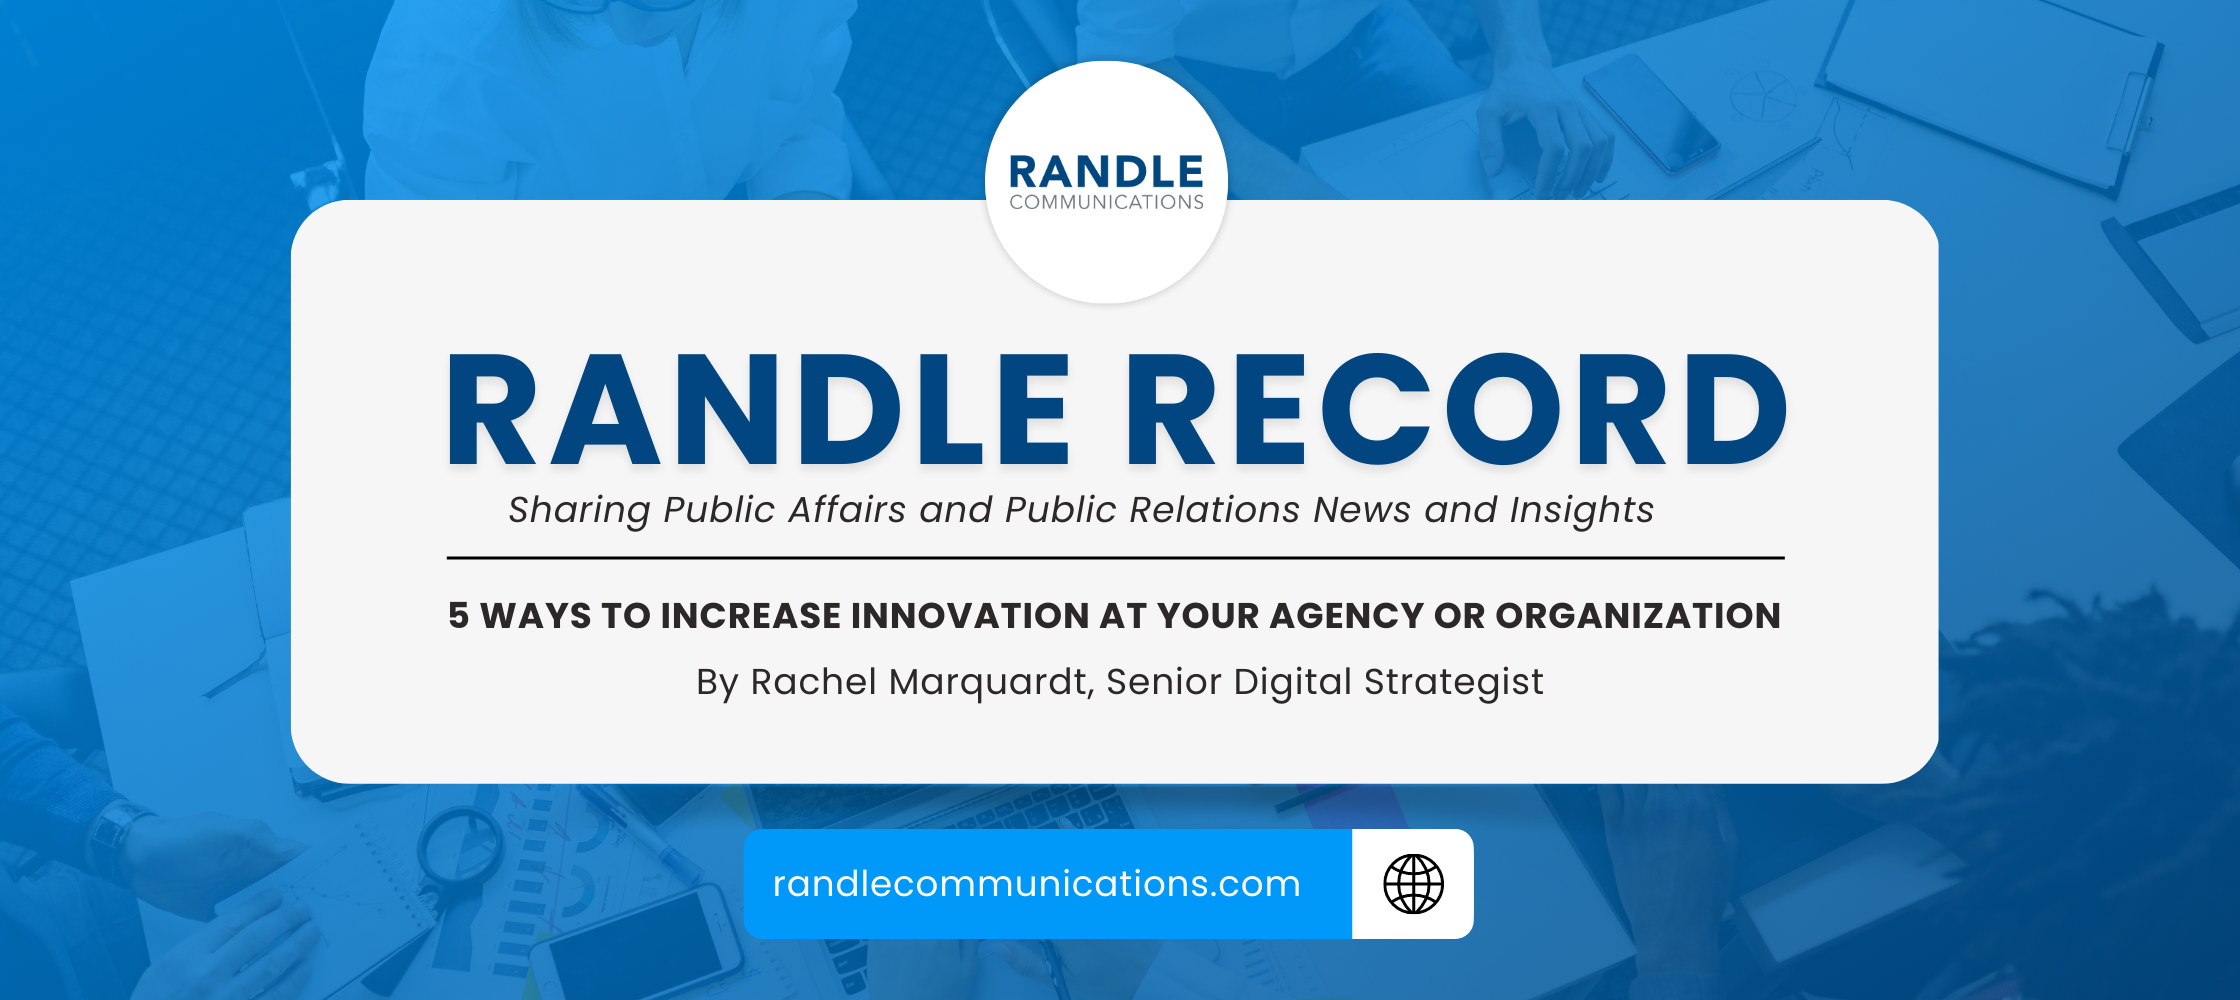 Randle Record blog banner image